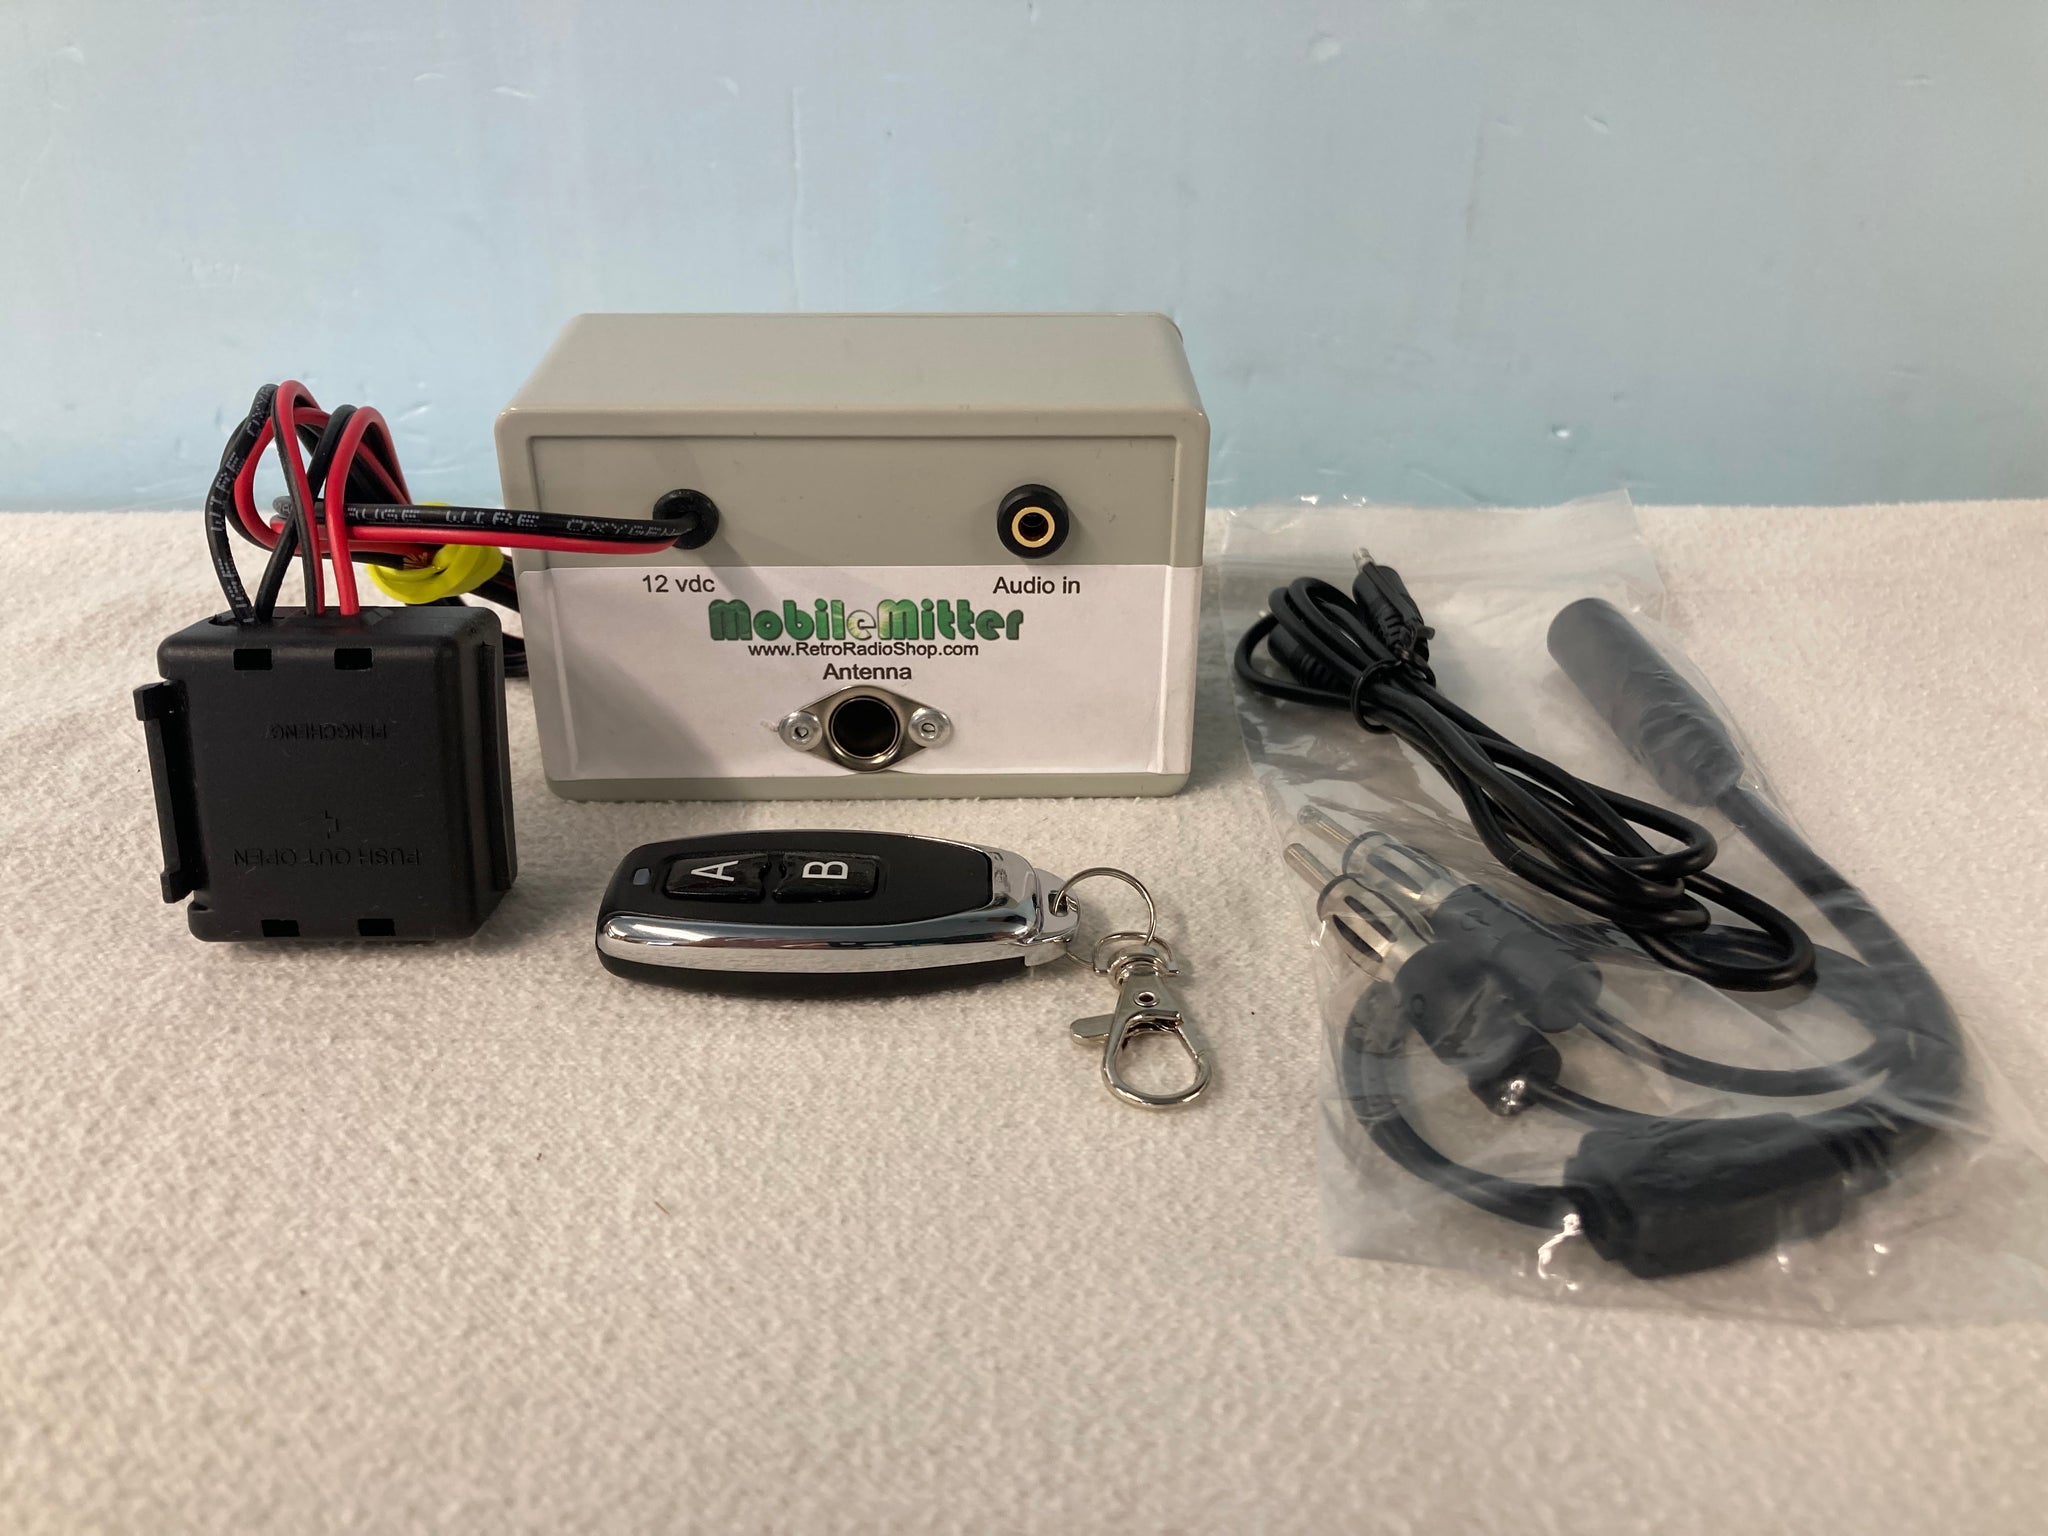 MobileMitter” Car AM Transmitter And Bluetooth/FM Adapter For Retro V, Antique, Retro, Vintage Tube Radios & Bluetooth